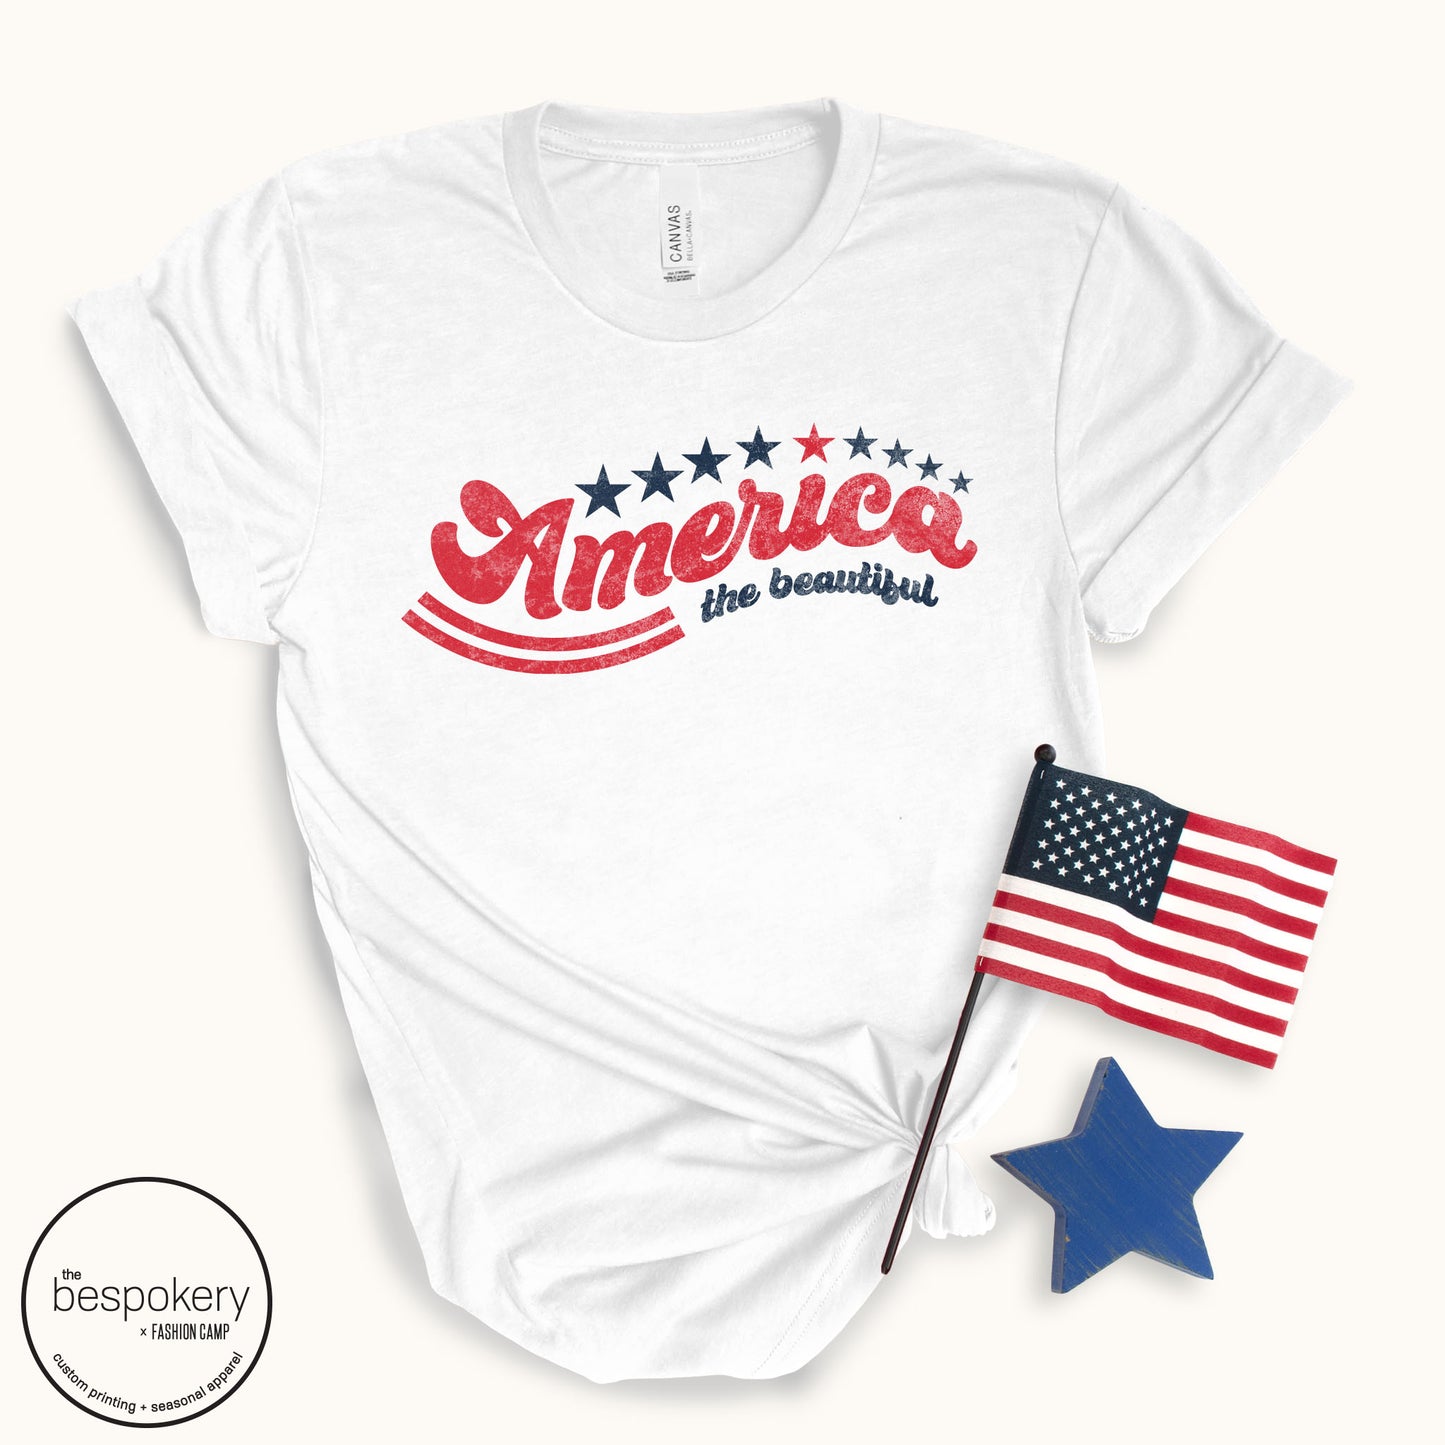 "America the Beautiful" - White T-shirt